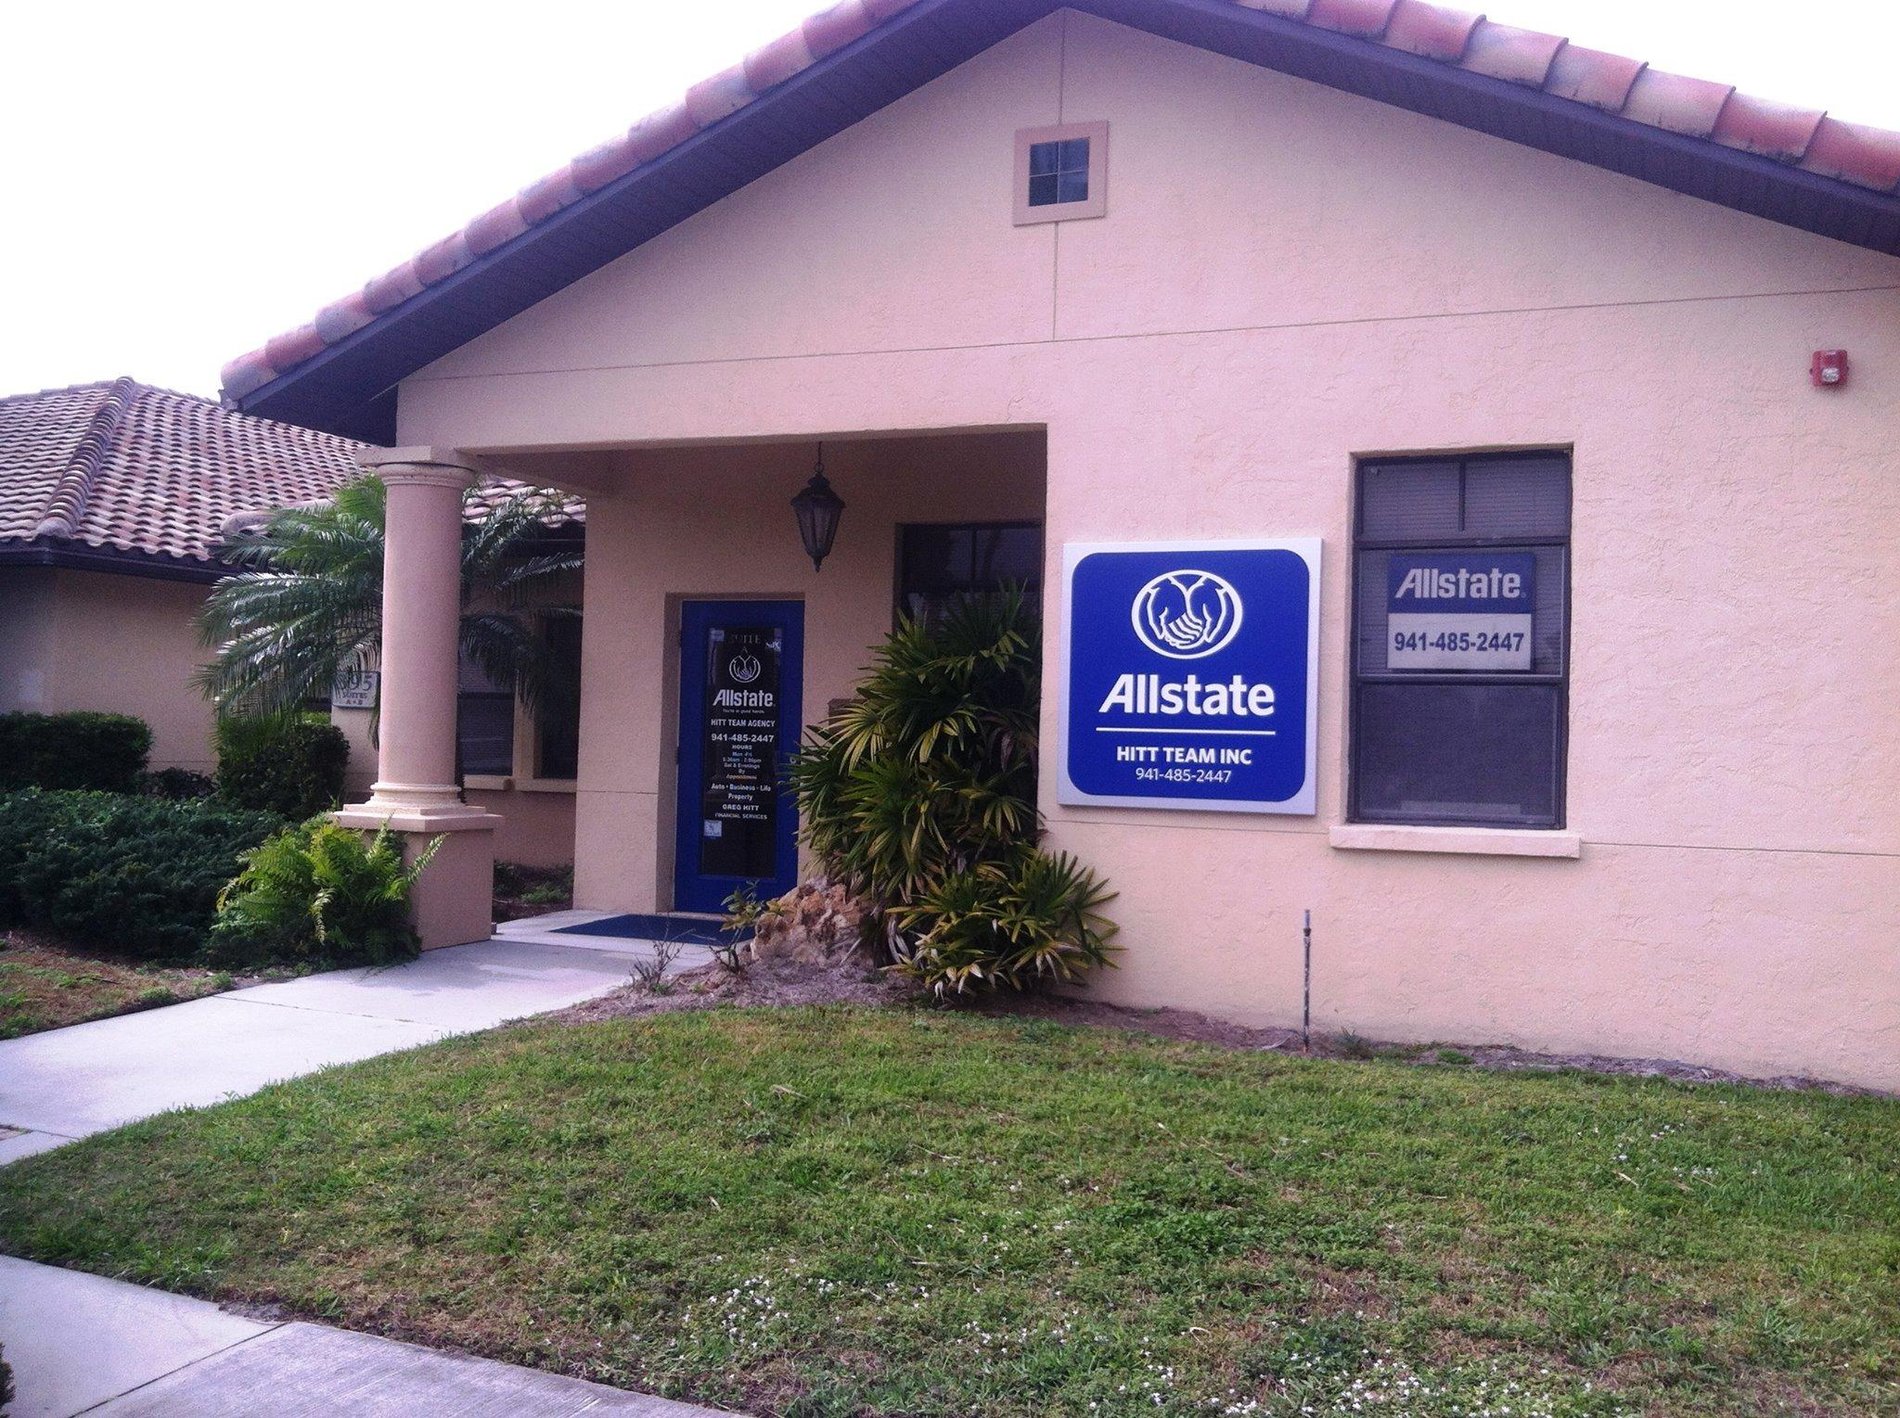 Allstate Car Insurance in Venice, FL Jan Hitt